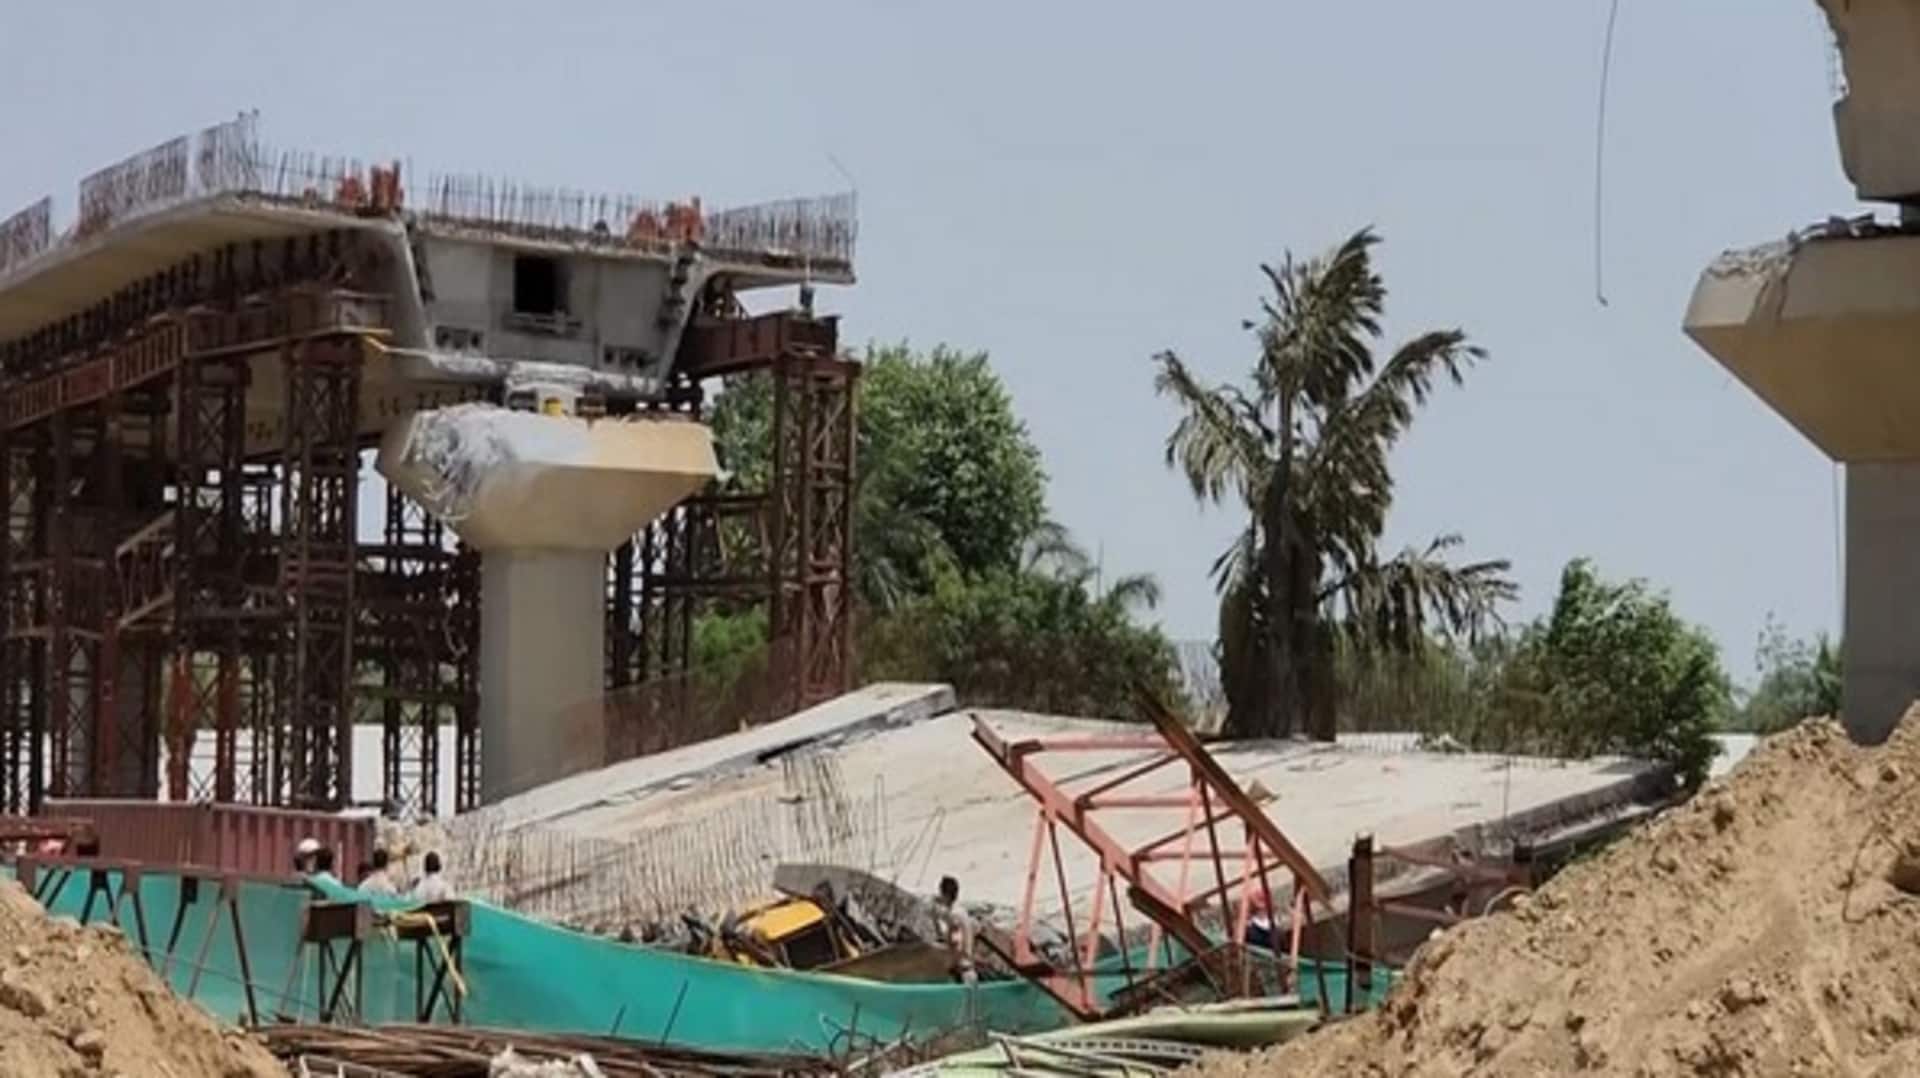 दिल्ली: निर्माणाधीन फ्लाईओवर का हिस्सा गिरा, क्रेन चालक की मौत